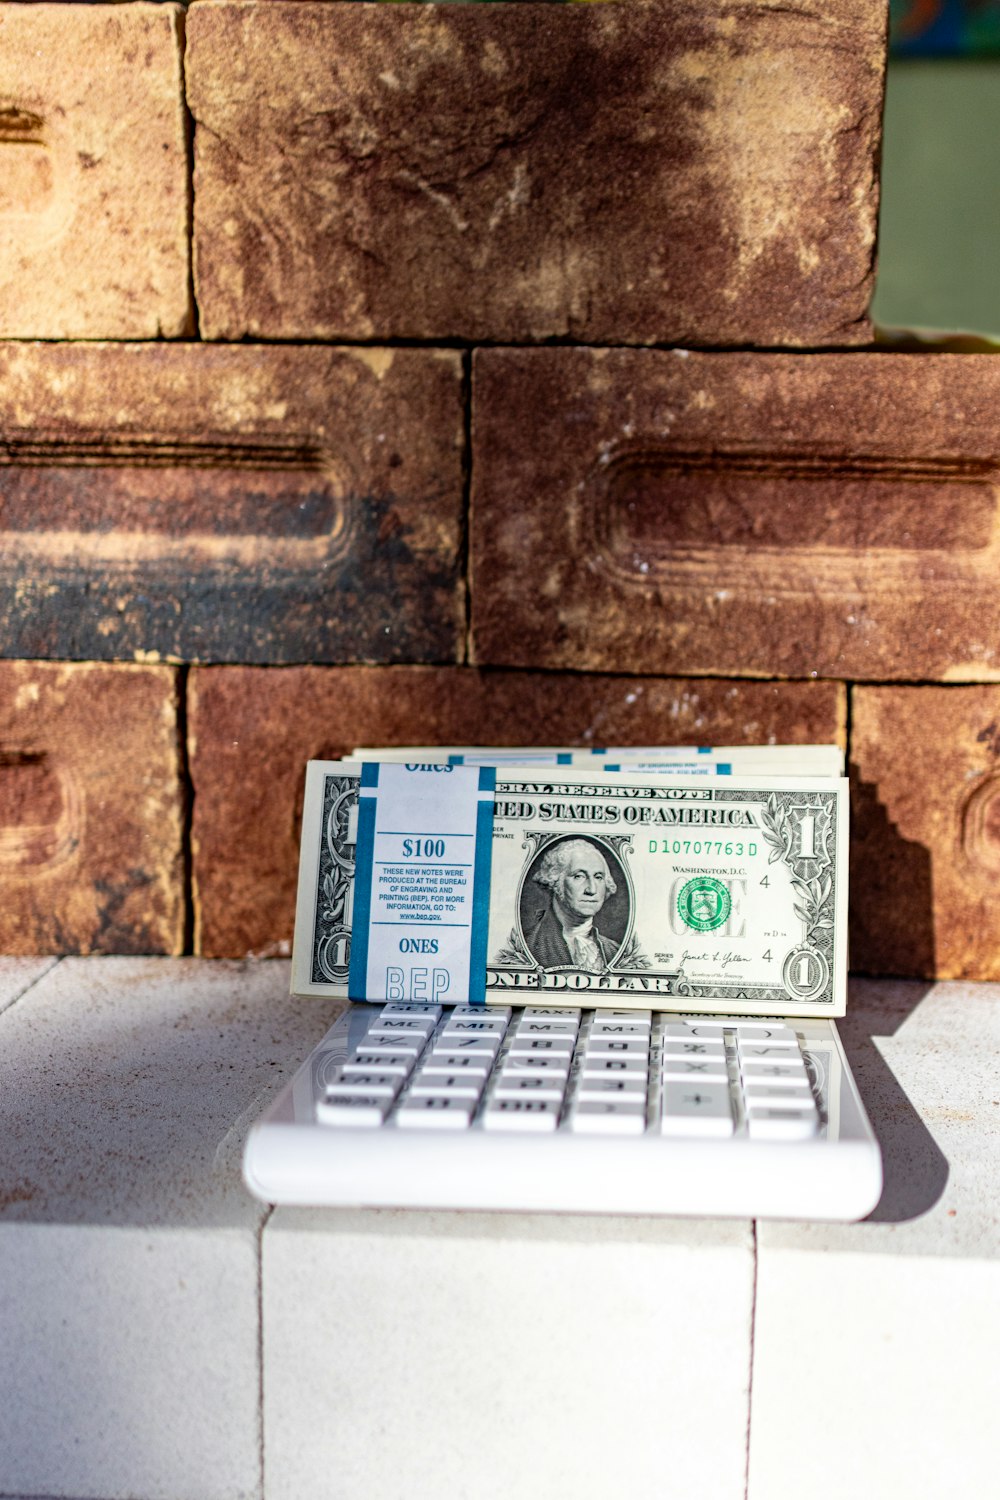 a dollar bill sitting on top of a laptop keyboard